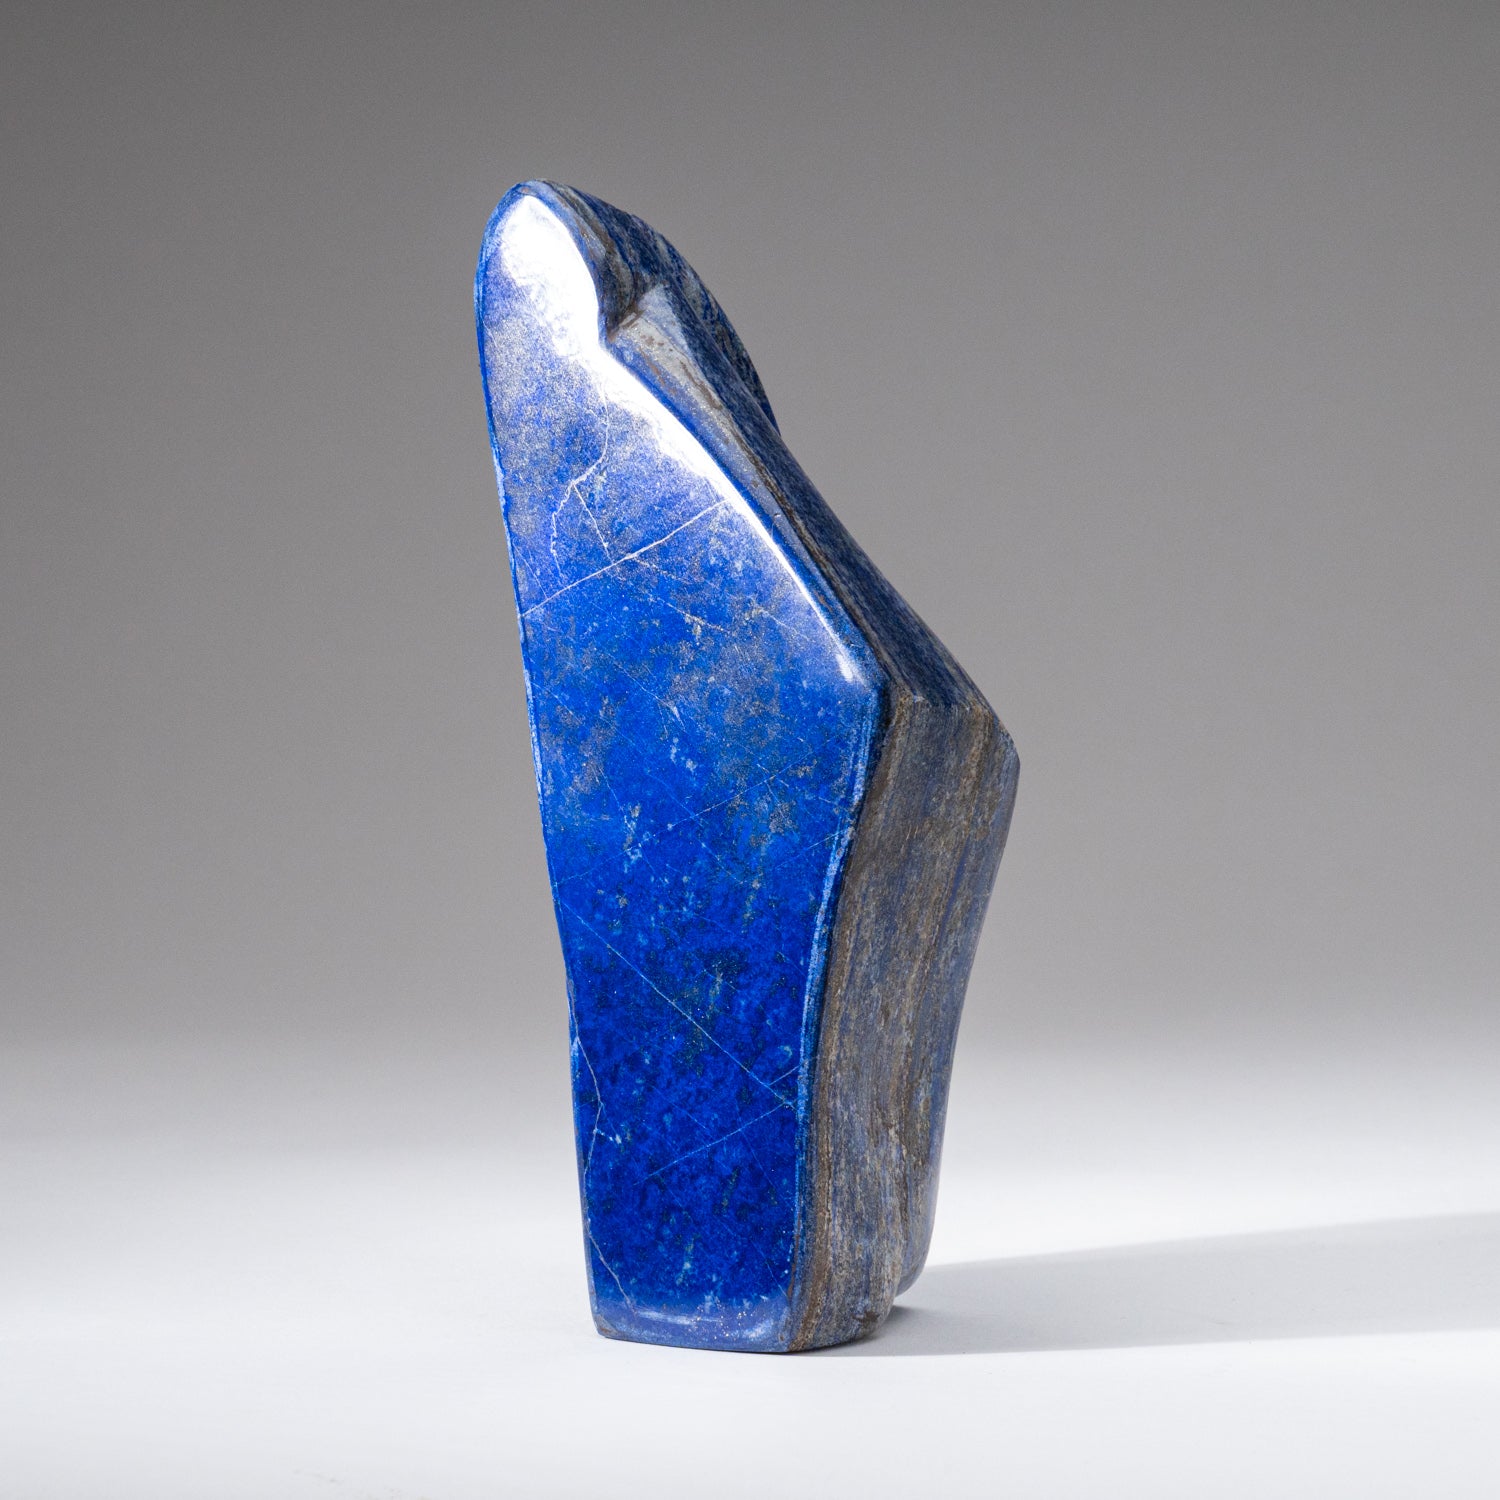 Polished Lapis Lazuli Freeform from Afghanistan (3.6 lbs)